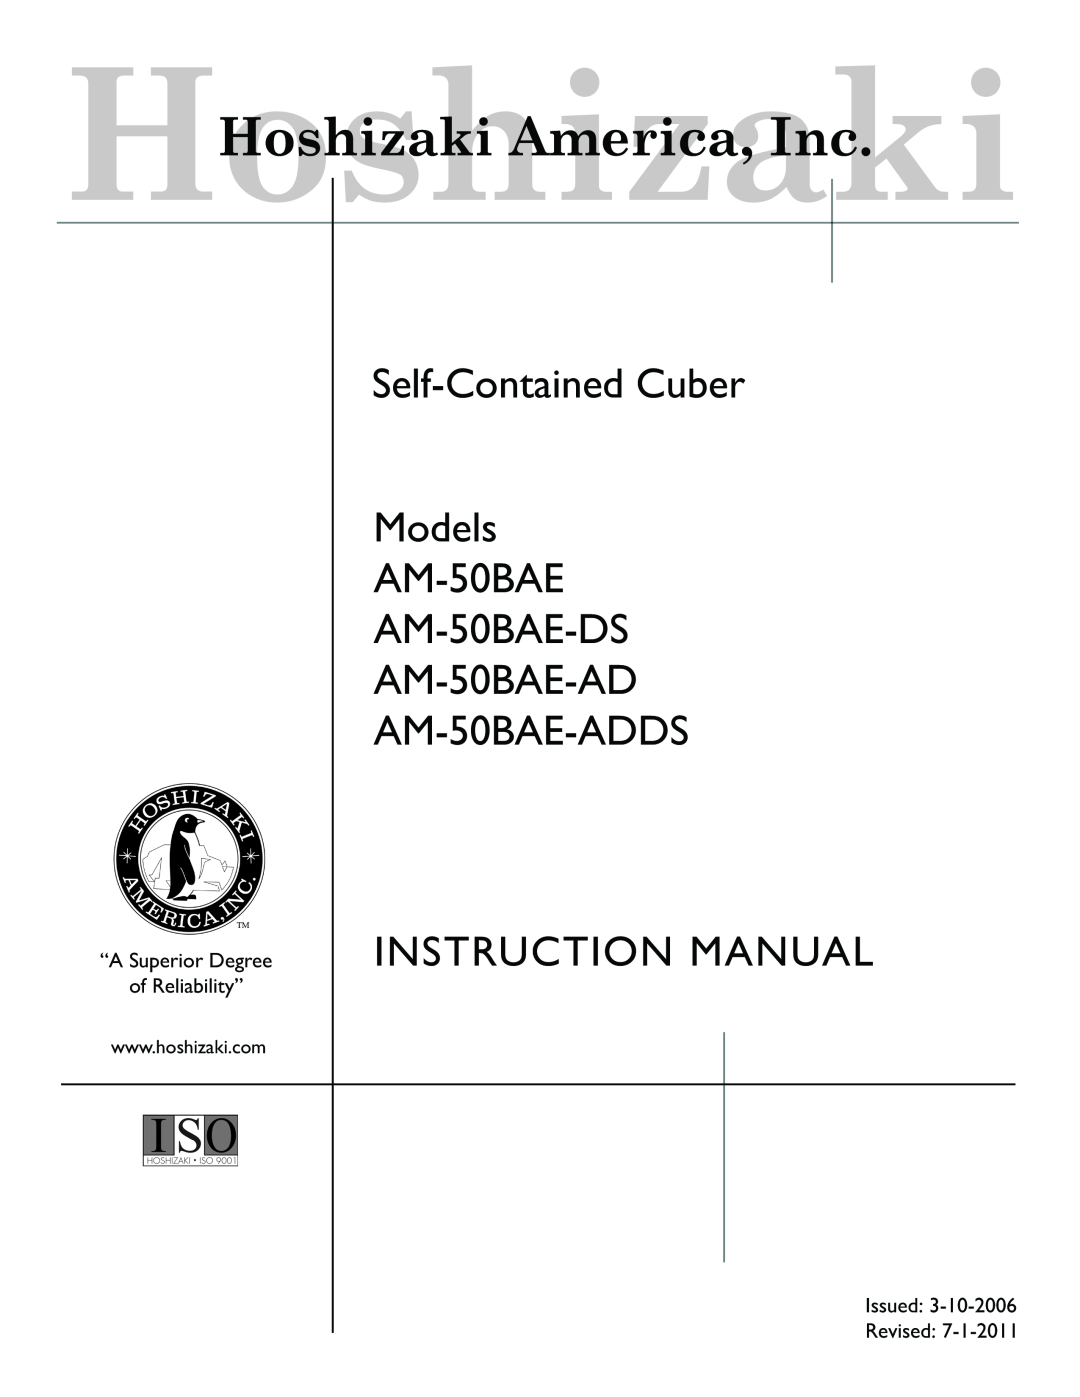 Hoshizaki service manual Self-Contained Cuber Models AM-50BAE AM-50BAE-DS AM-50BAE-AD, AM-50BAE-ADDS 